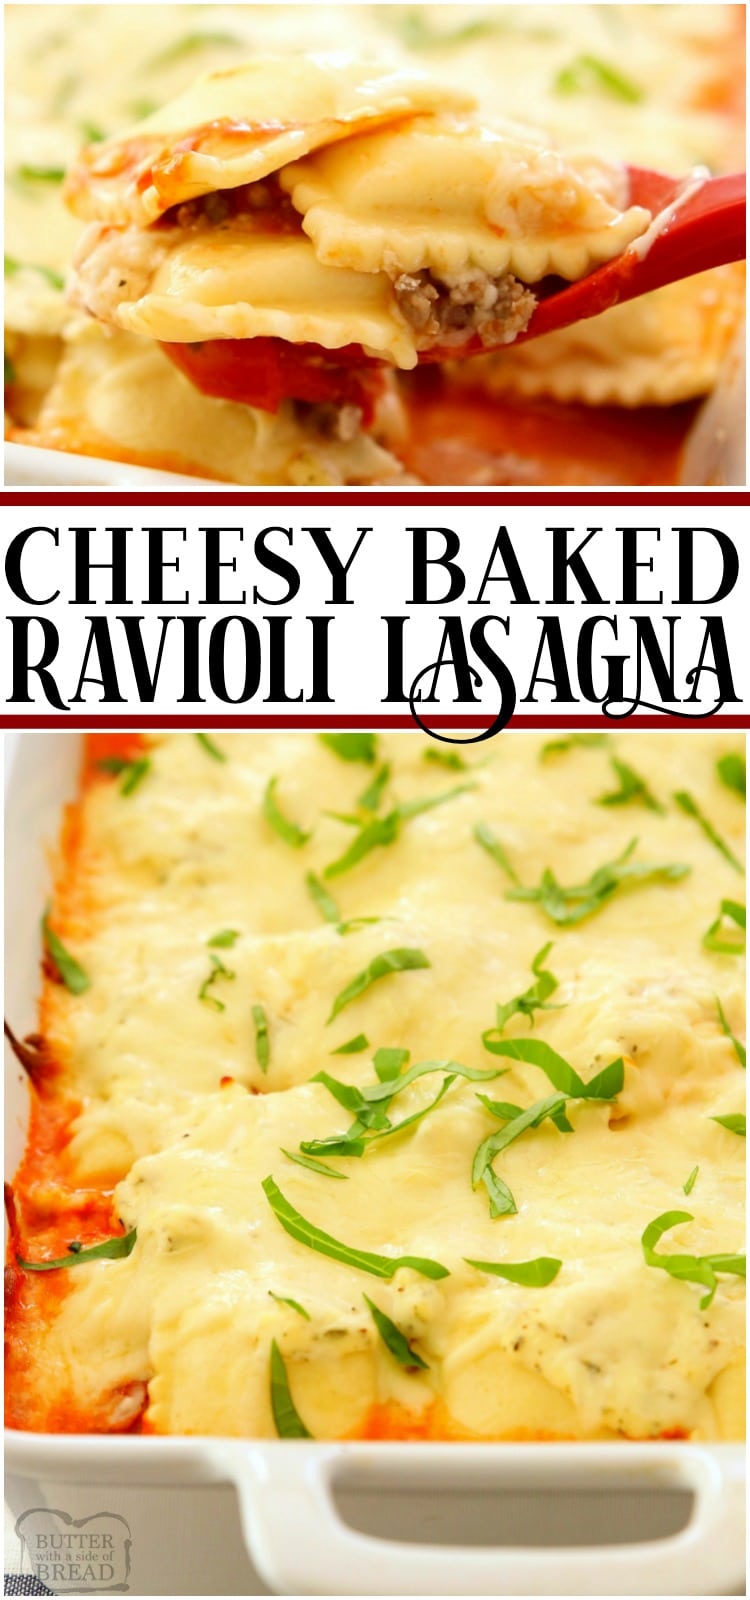 Cheesy Baked Ravioli Lasagna made with San Marzano tomatoes, 3 types of cheese, Italian Sausage and frozen ravioli. Easy weeknight baked ravioli recipe full of flavor!